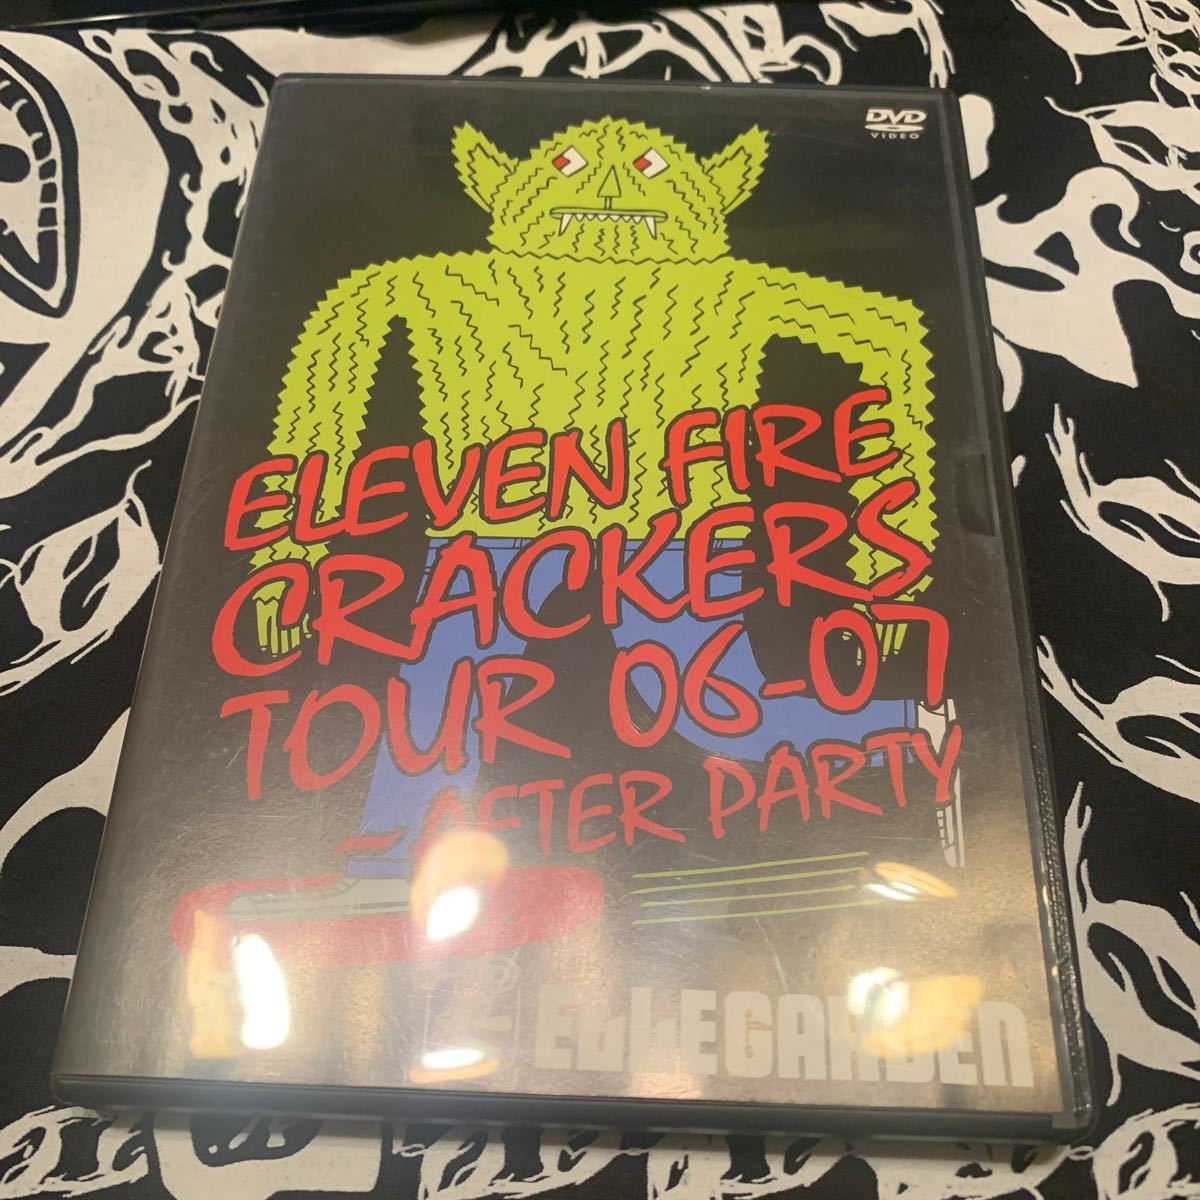 eleven fire crackers tour 06 07